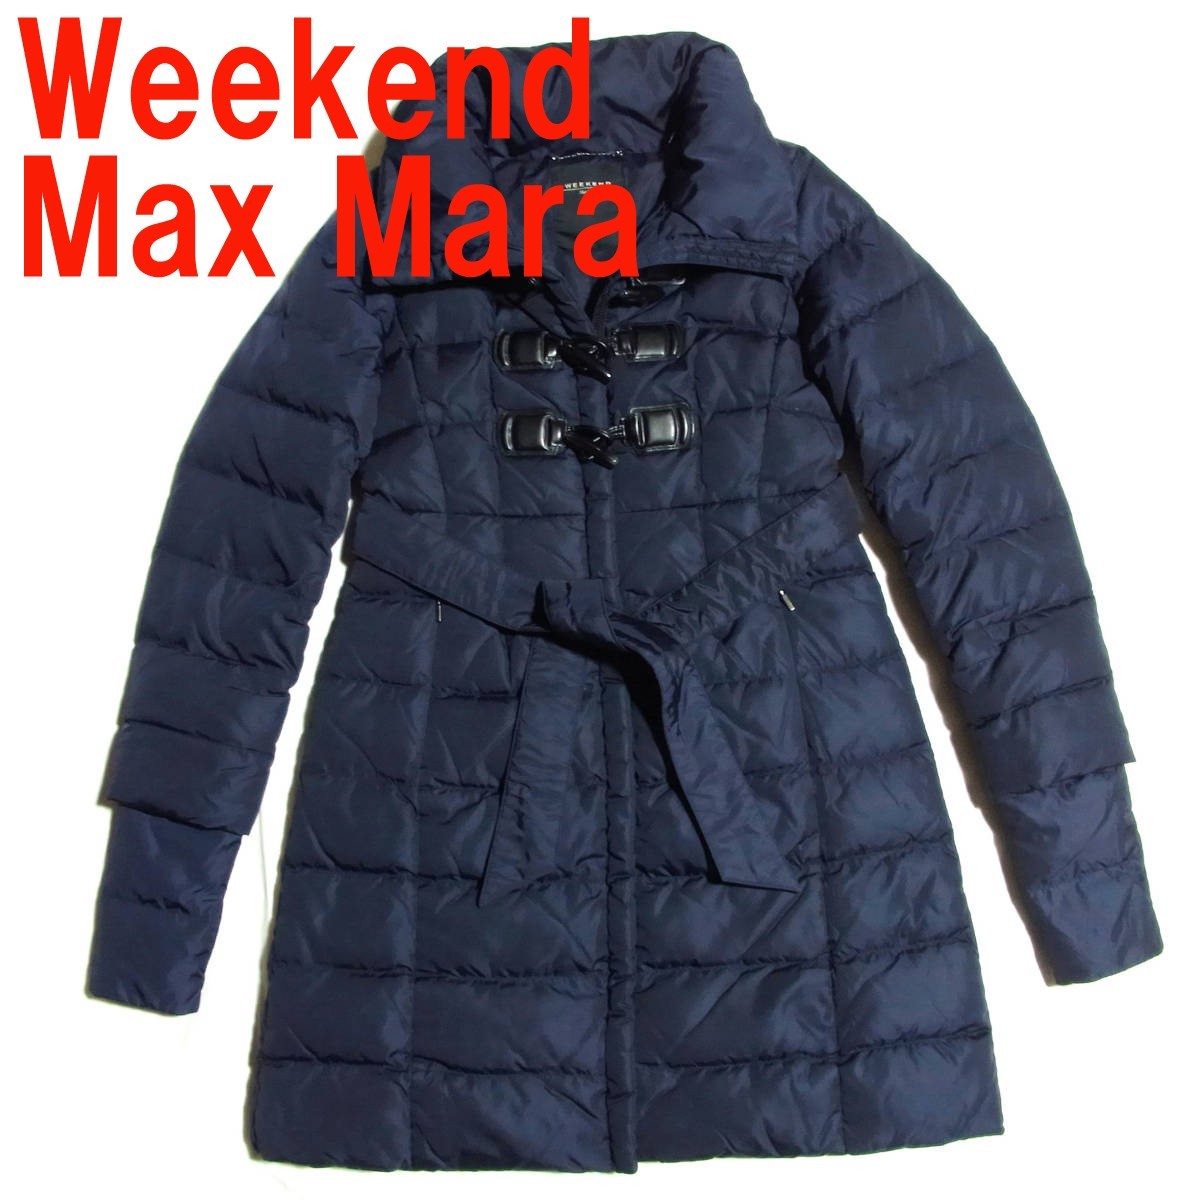 Weekend Max Mara マックスマーラ ダッフル ダウン コート 38-